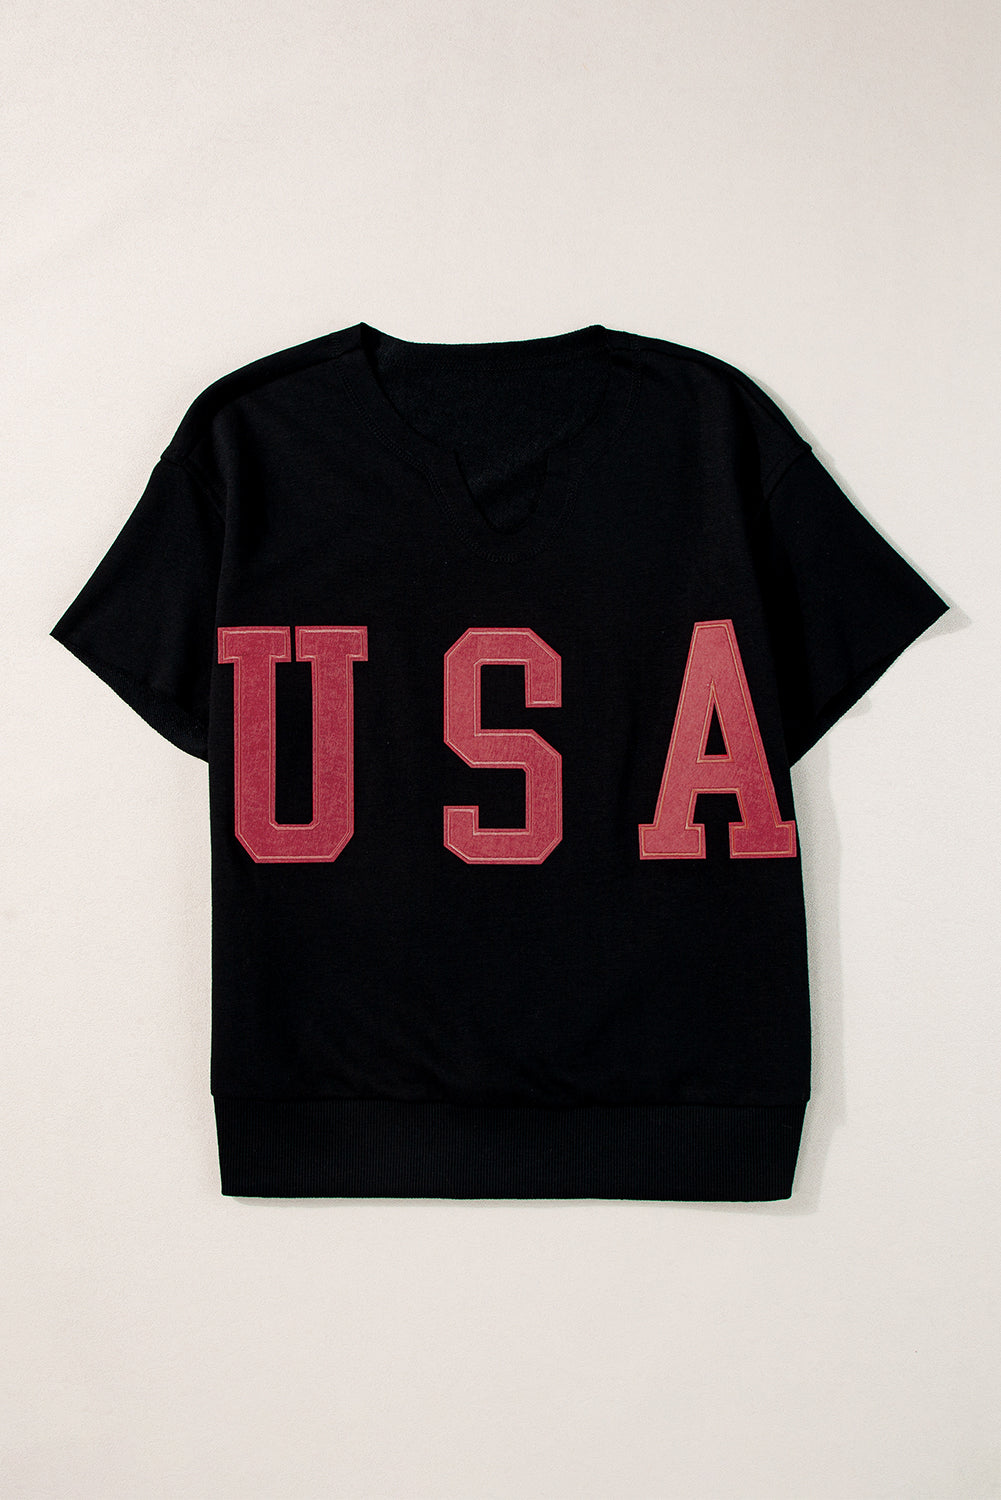 USA Notched Short Sleeve T-Shirt Dresses & Tops